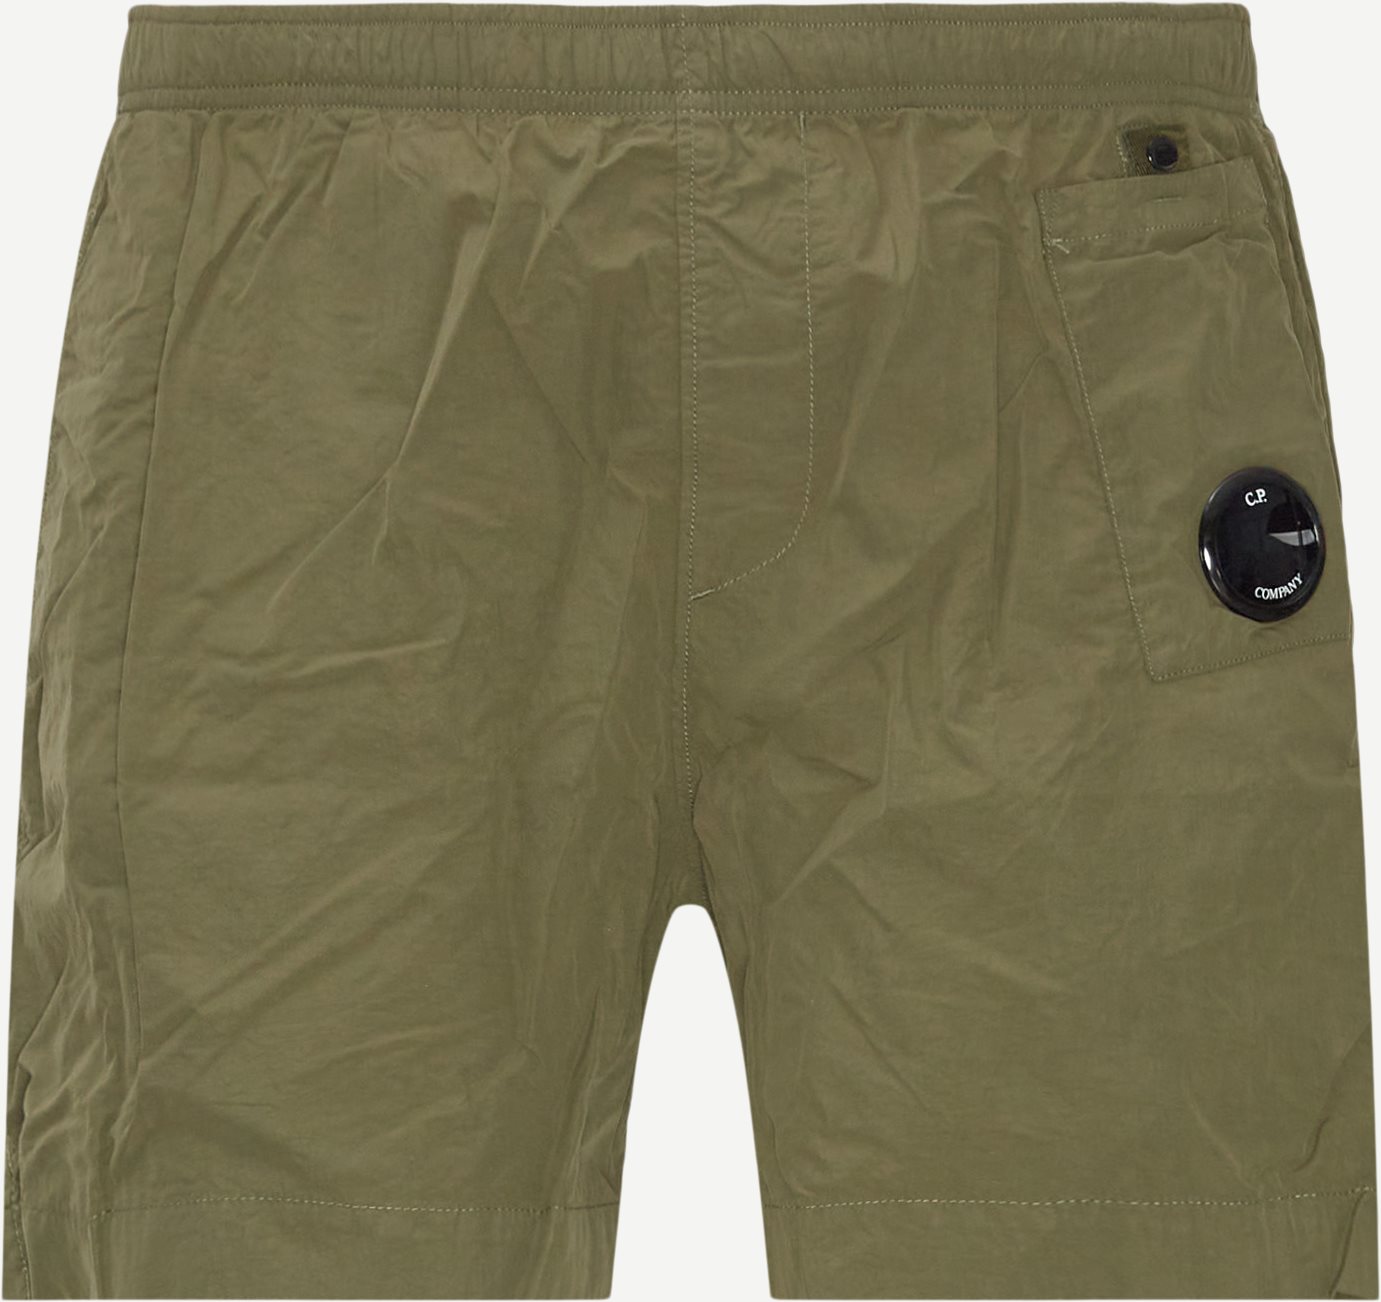 Flatt Nylon Beach Shorts - Shorts - Regular fit - Army